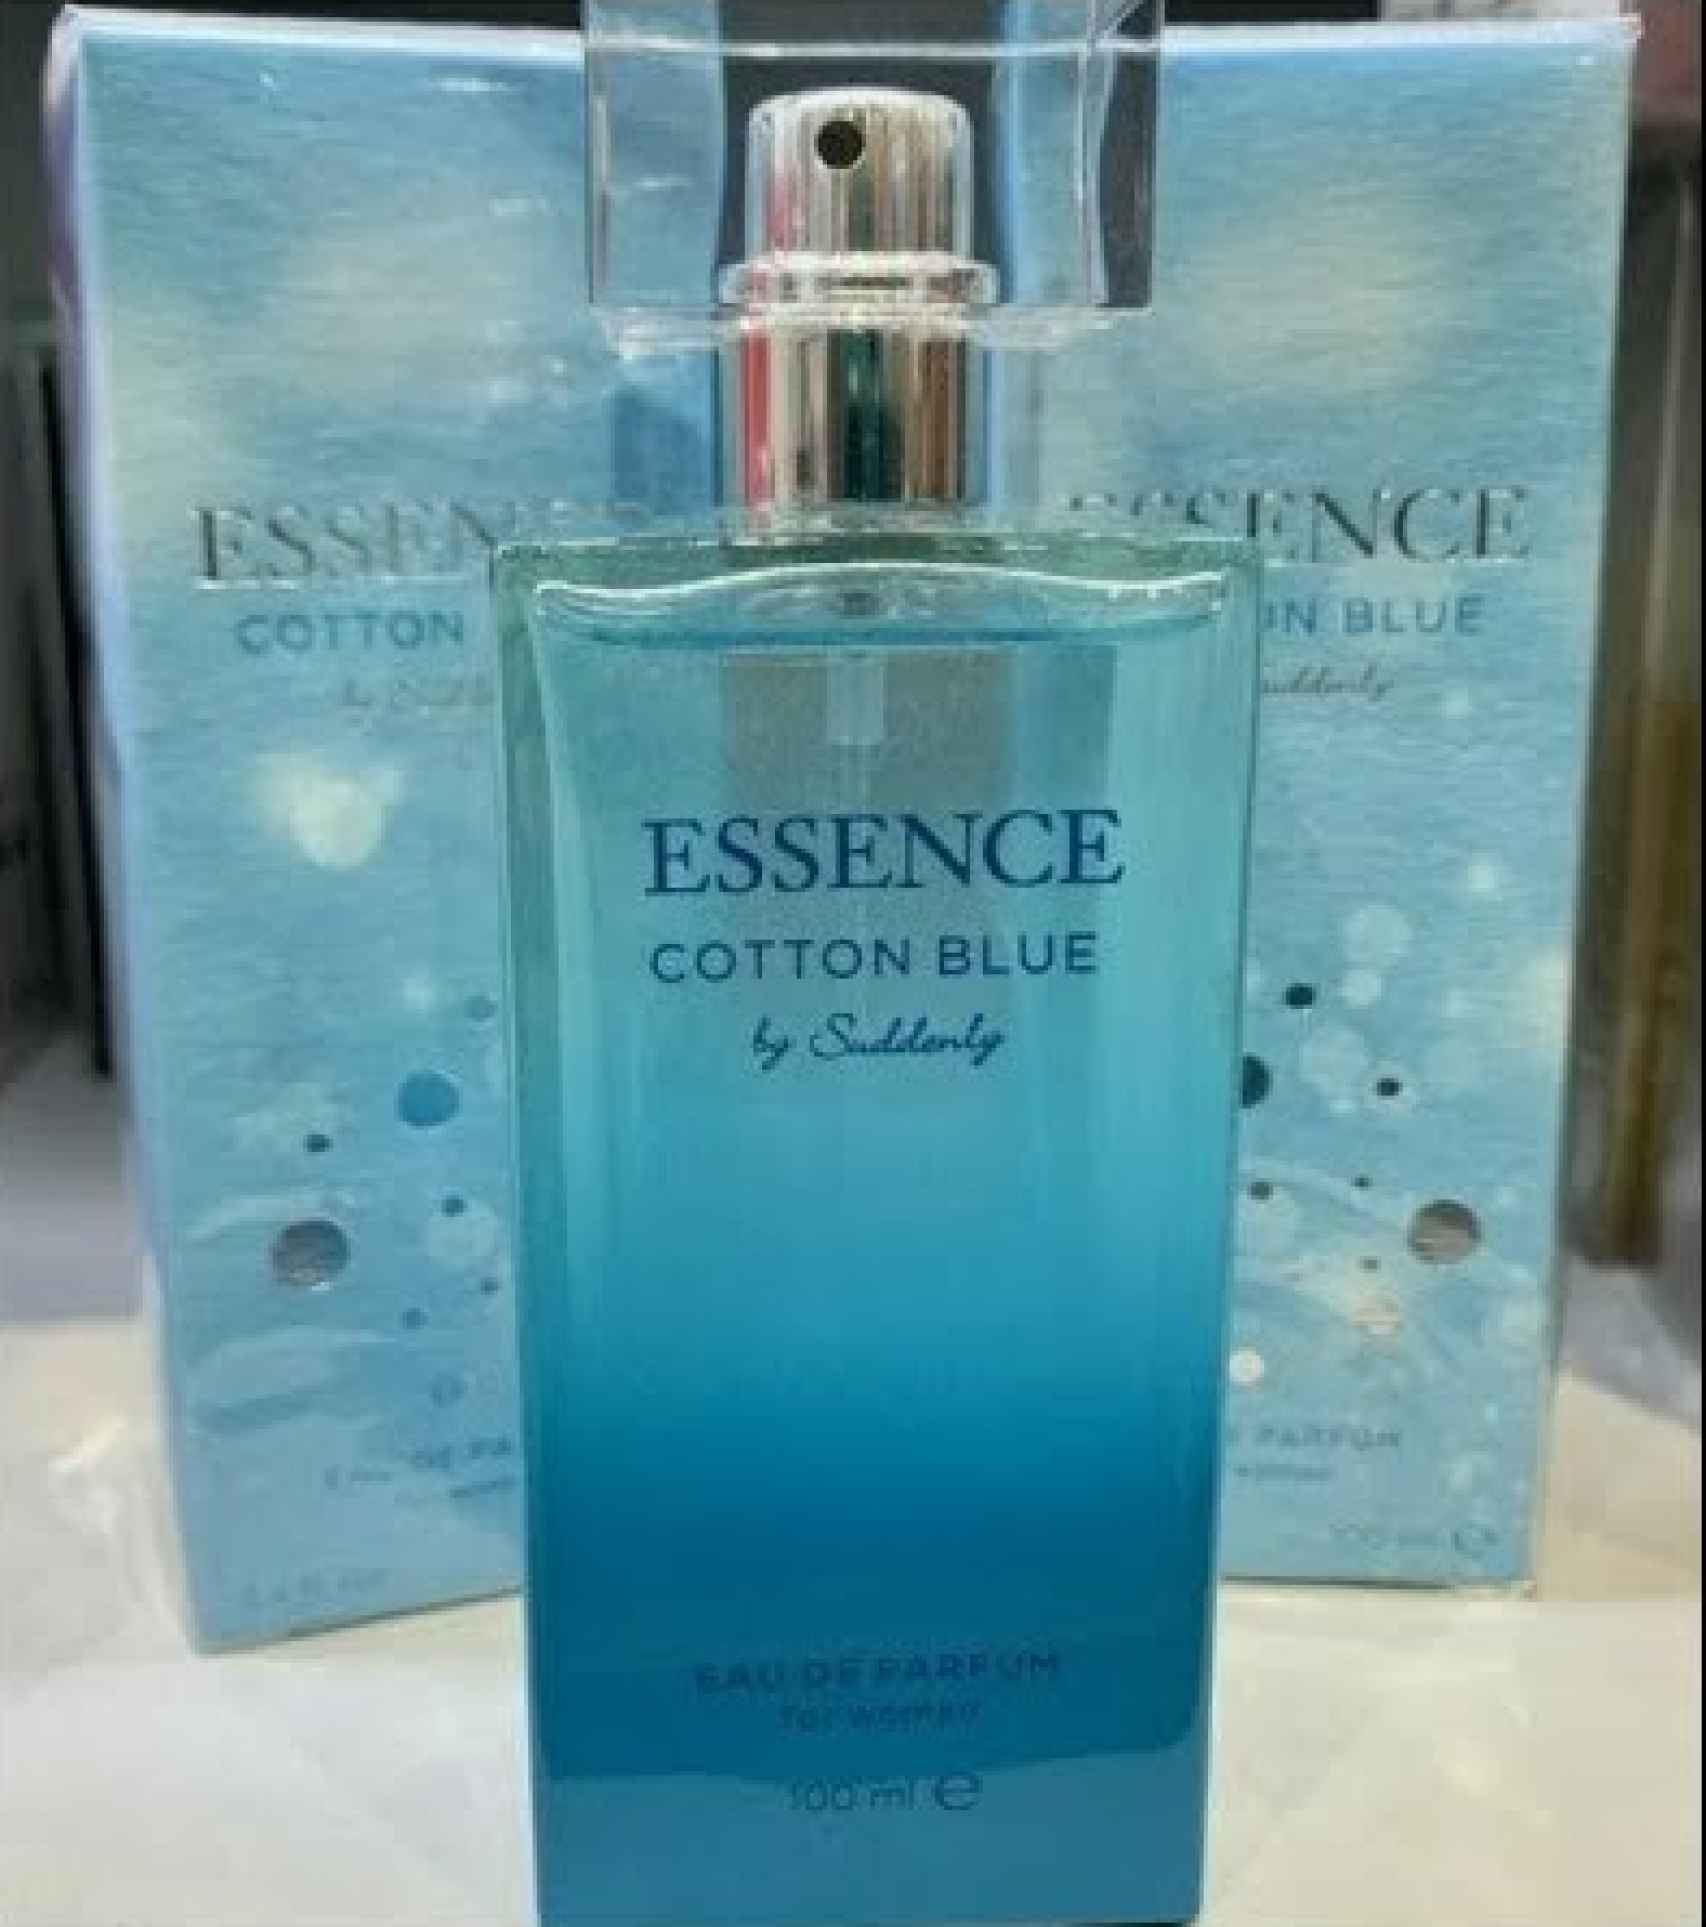 La colonia Essence Cotton Blue by Suddenly de Lidl recuerda al perfume Light Blue de Dolce&Gabbana.